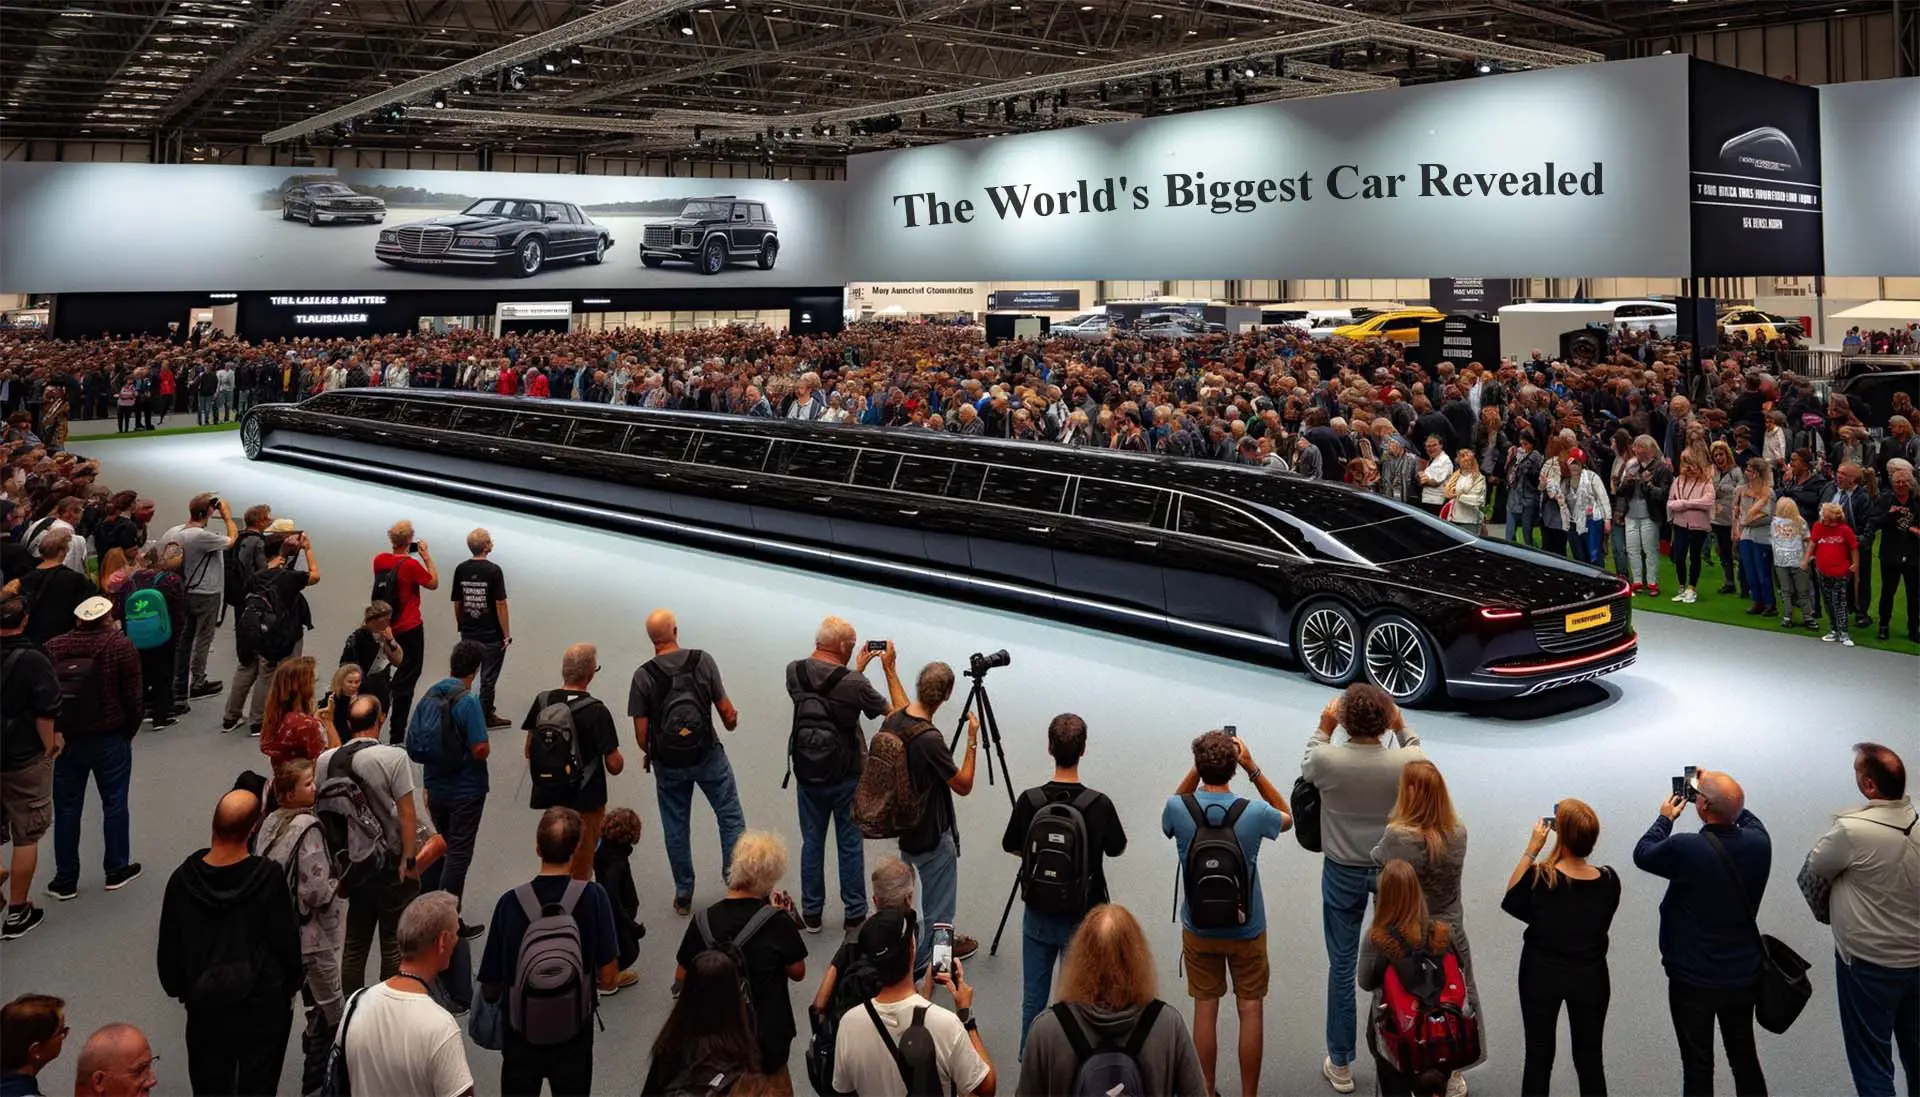 The World's Biggest Car Revealed - AI image